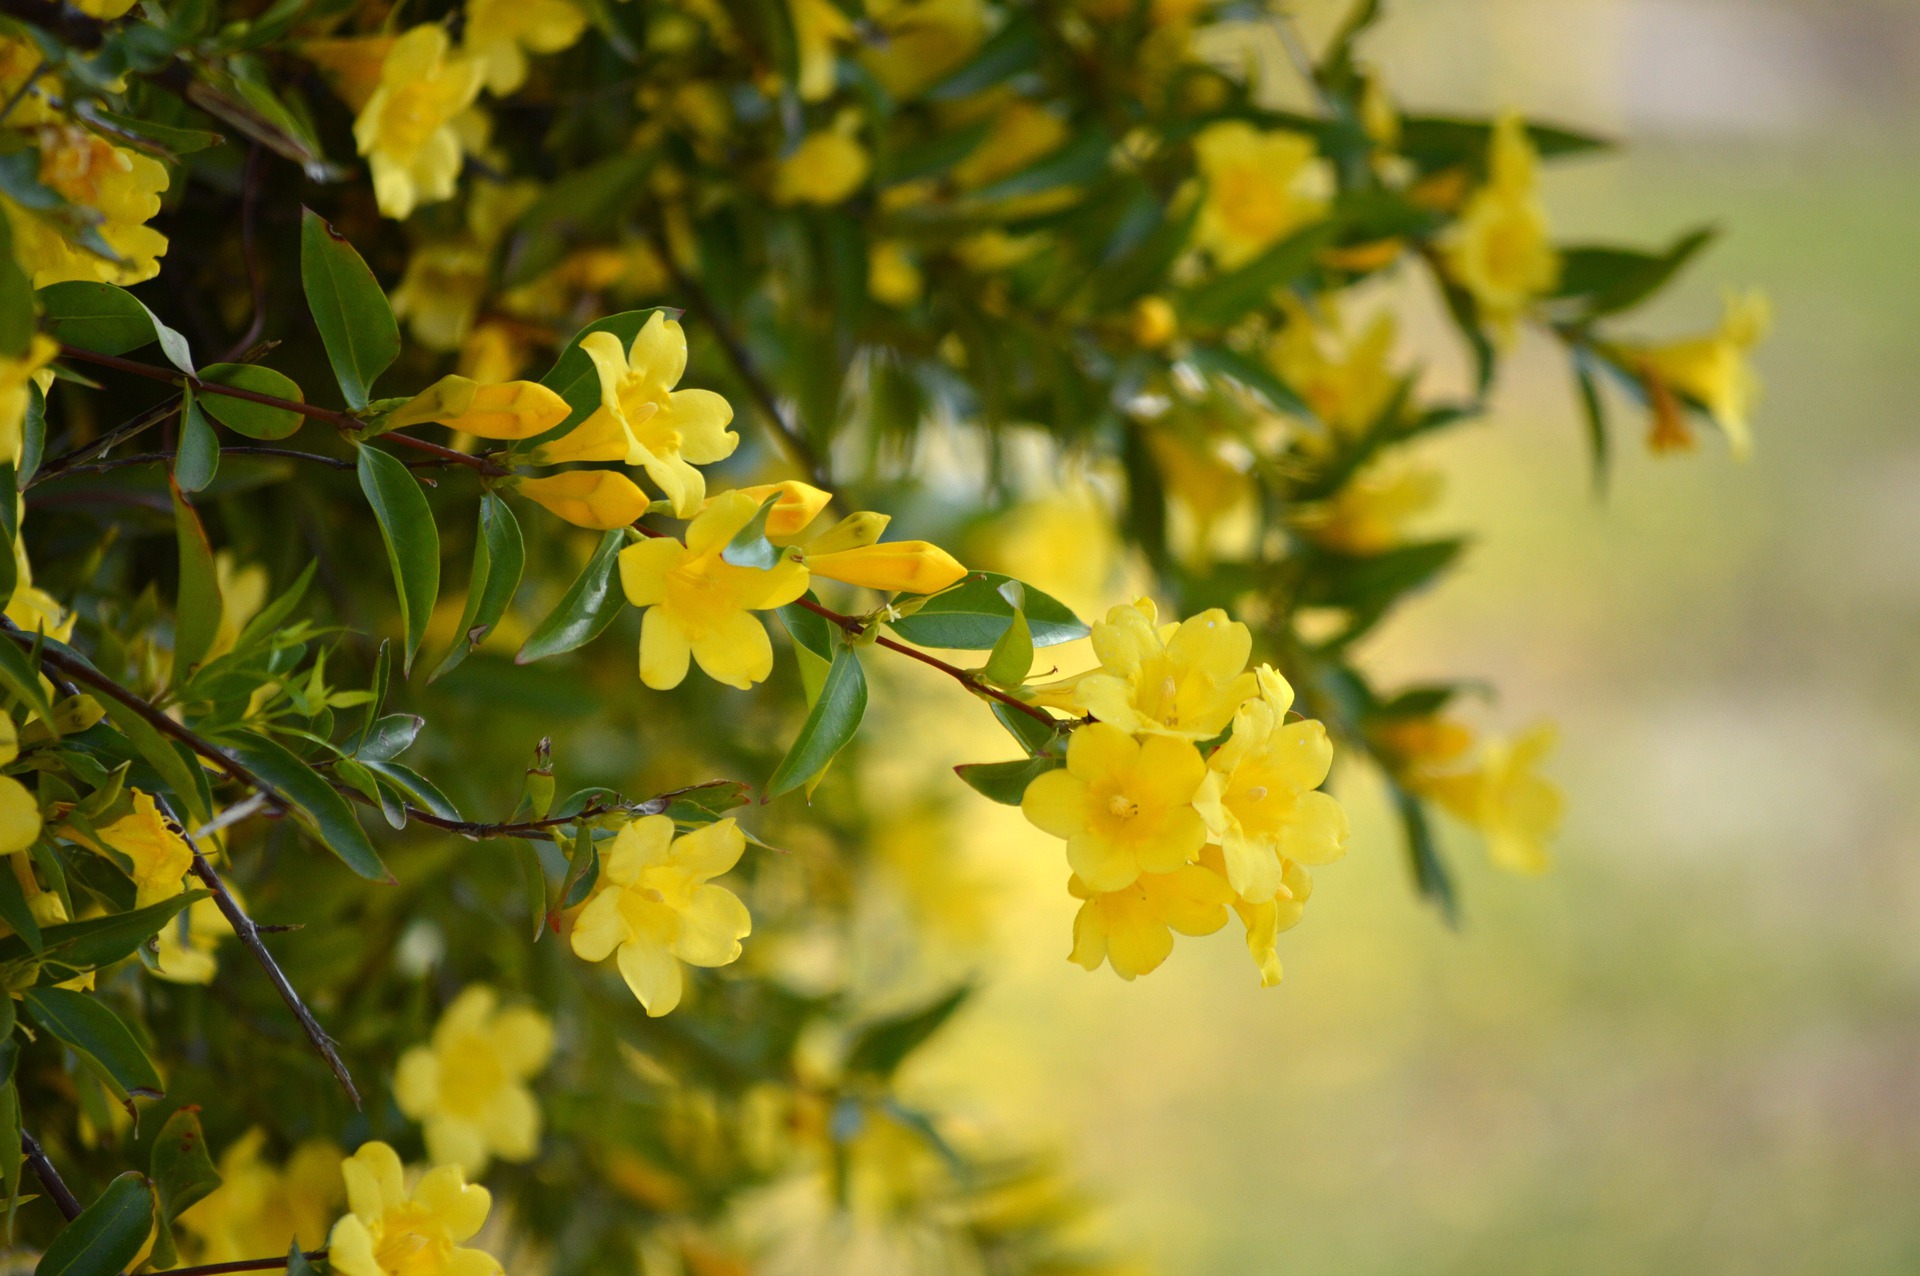 jasmin jaune italie - La jardinerie de pessicart nice - Livraison a domicile nice 06 plantes vertes terres terreaux jardinage arbres cactus